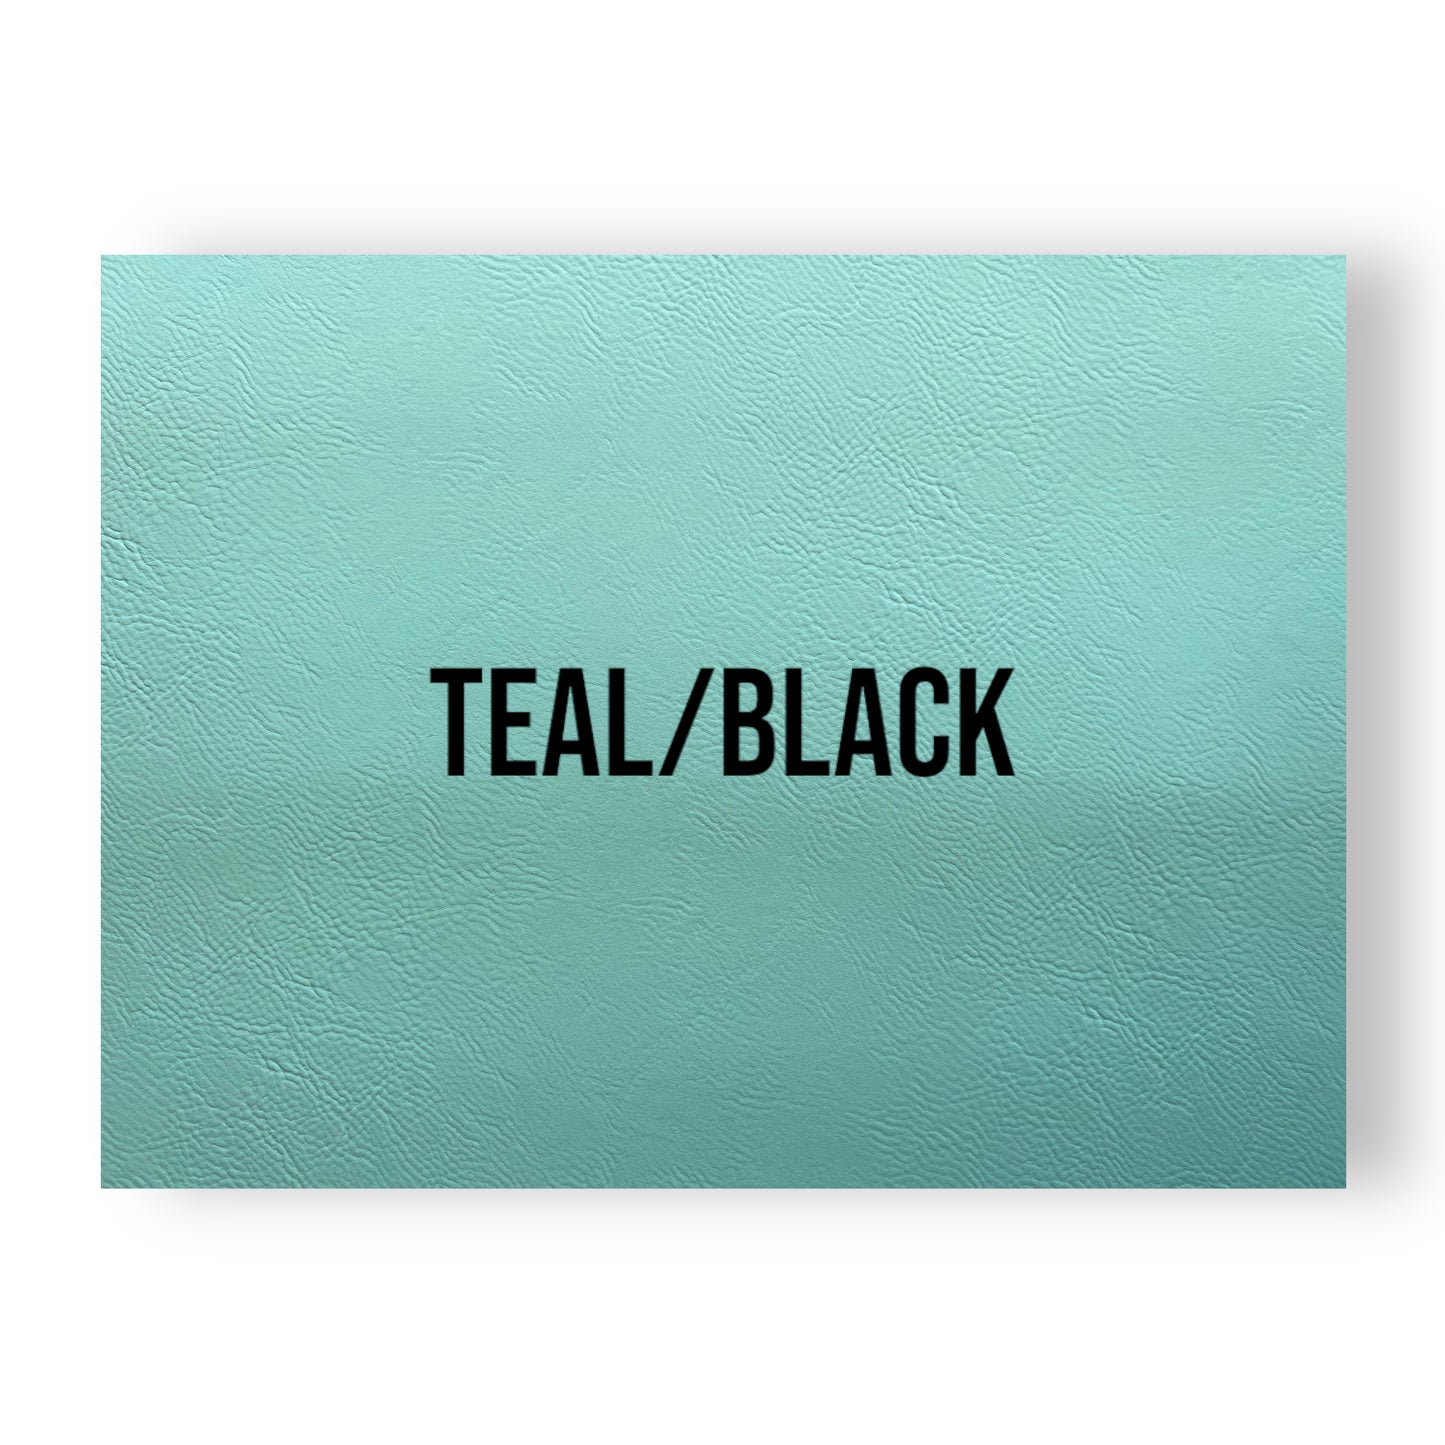 TEAL/BLACK HYDBOND’D LEATHERETTE SHEET (12"x24")